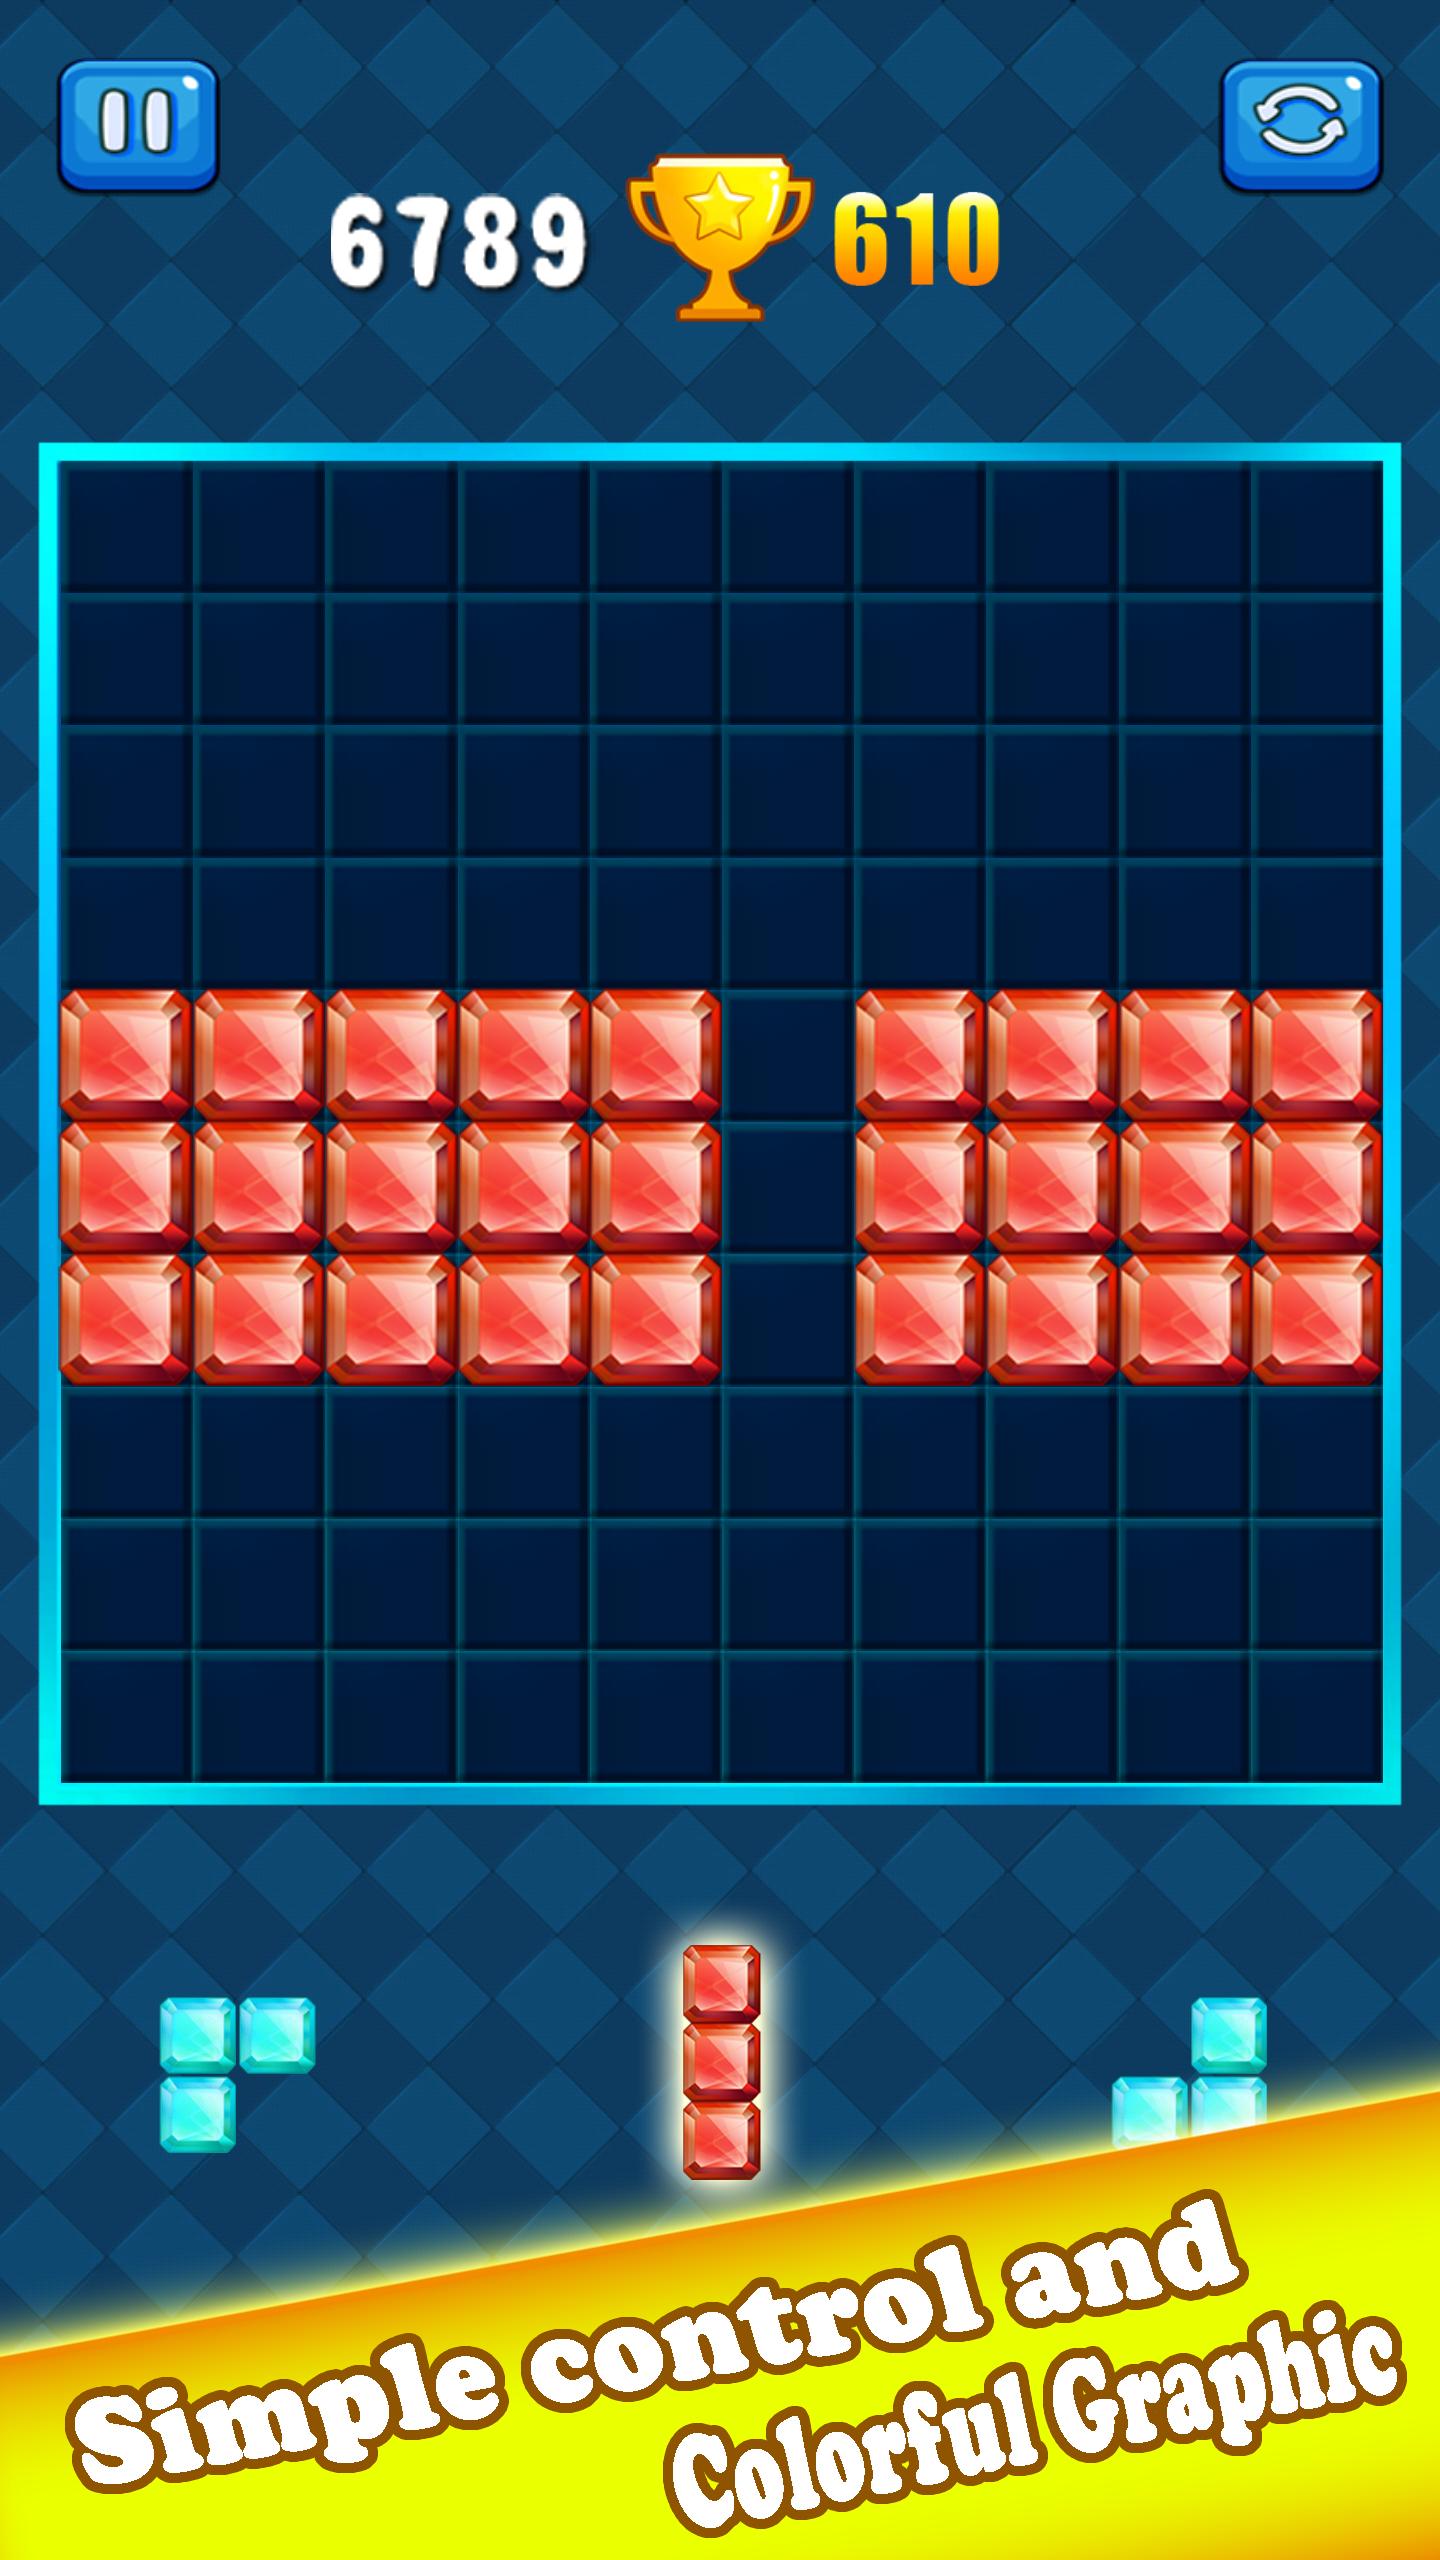 Juega al juego gratis Block Puzzle Jewel for Android - APK Download